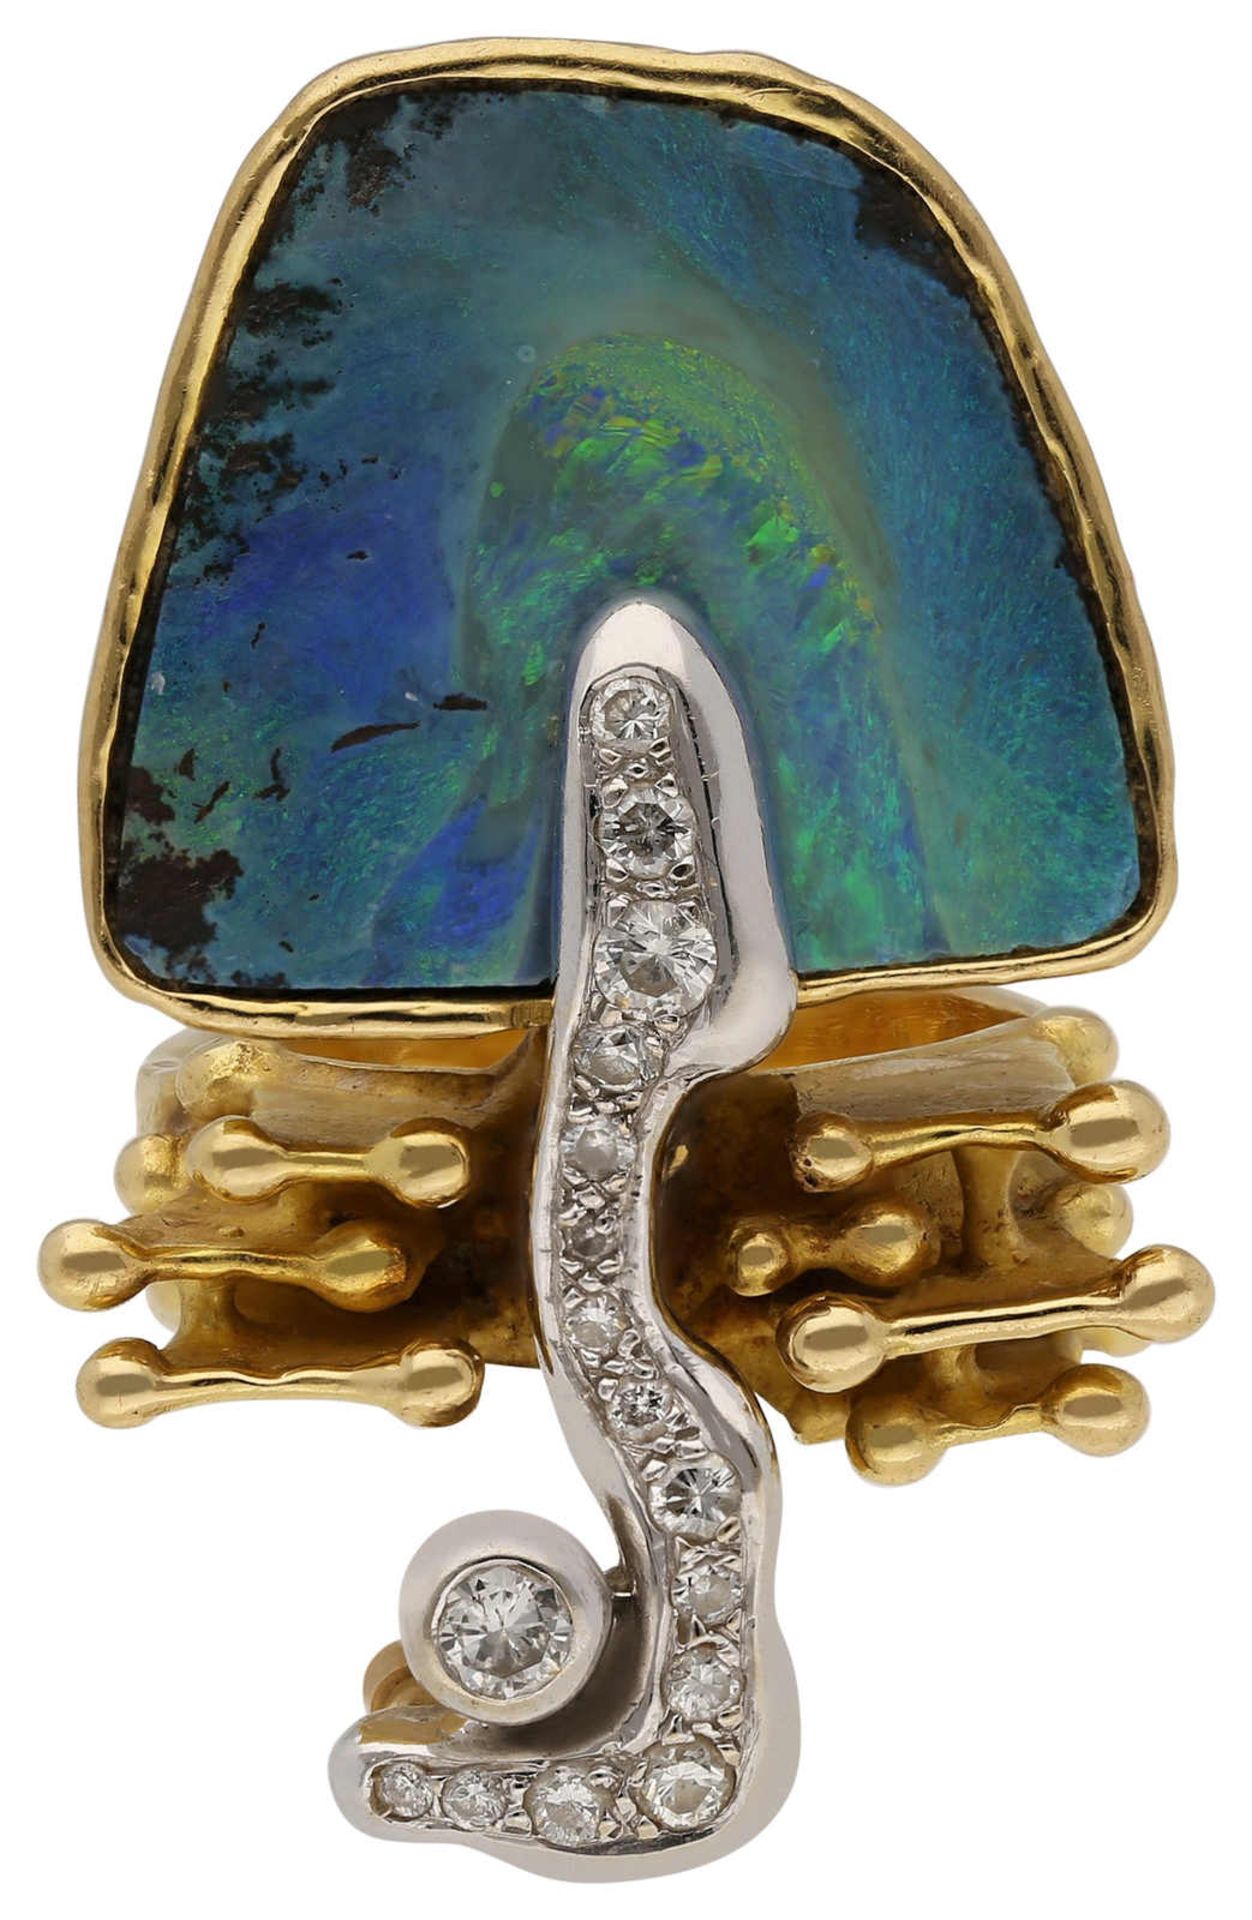 Opal-Brillant-Ring Kreative Goldschmiedearbeit in Gelbgold/Weissgold 18K. Blickfang ist ein